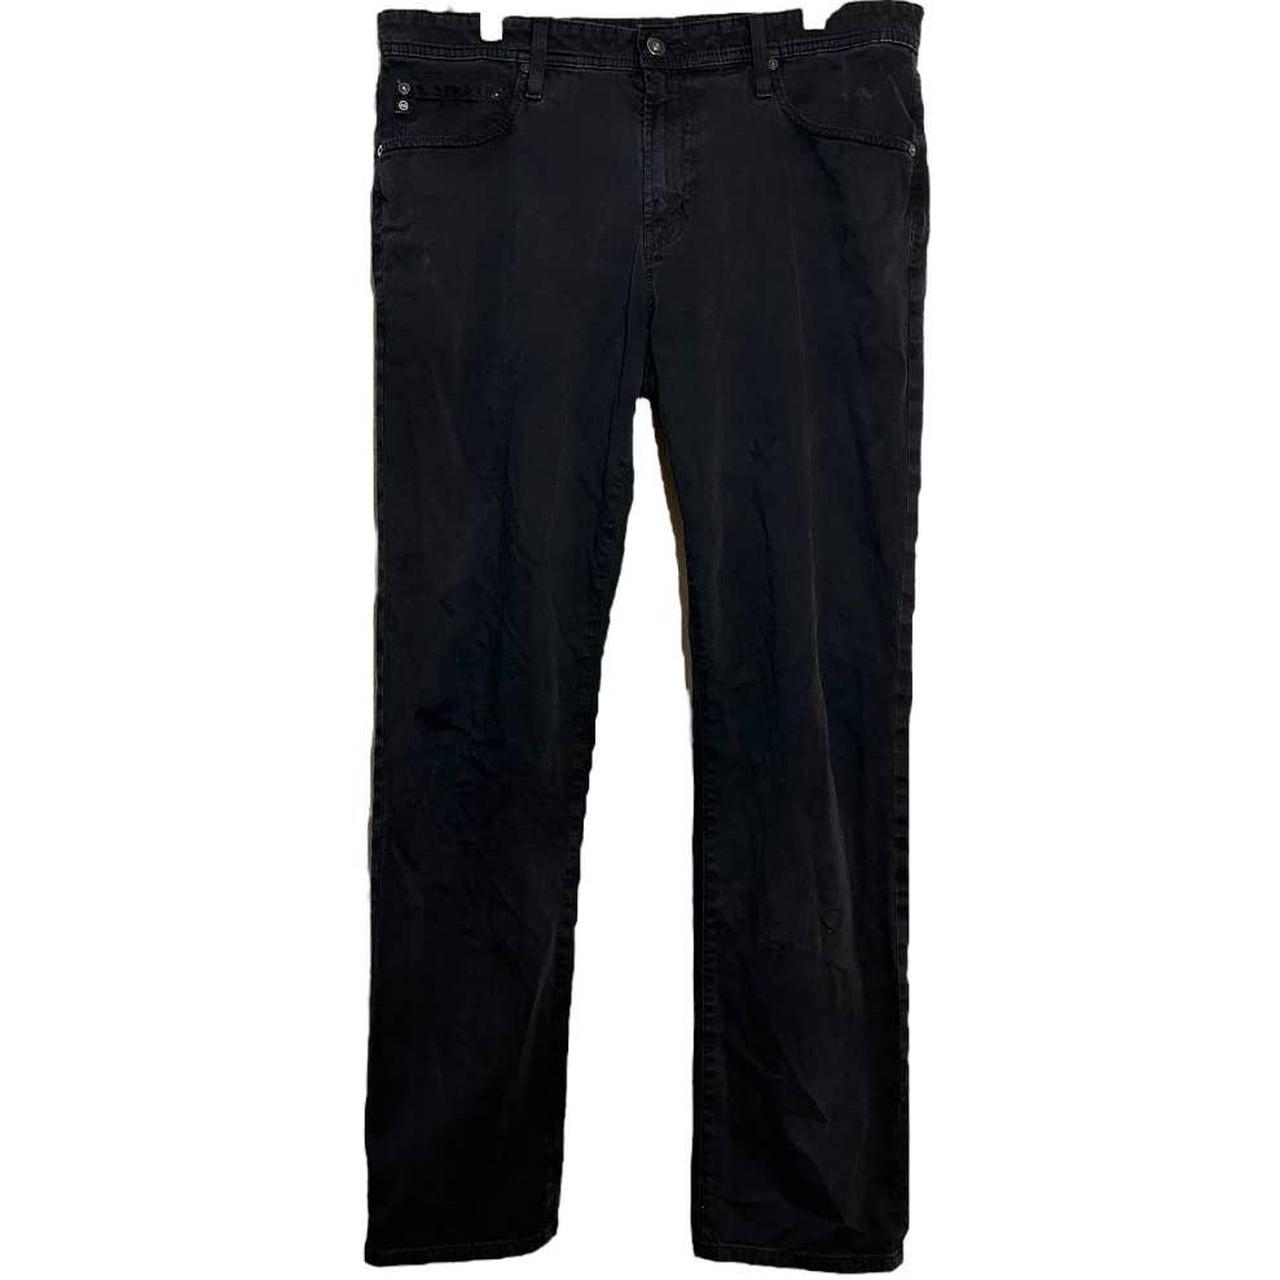 AG Adriano Goldschmied Jeans Mens Size 36X32 Black Denim Graduate Tailored  Leg